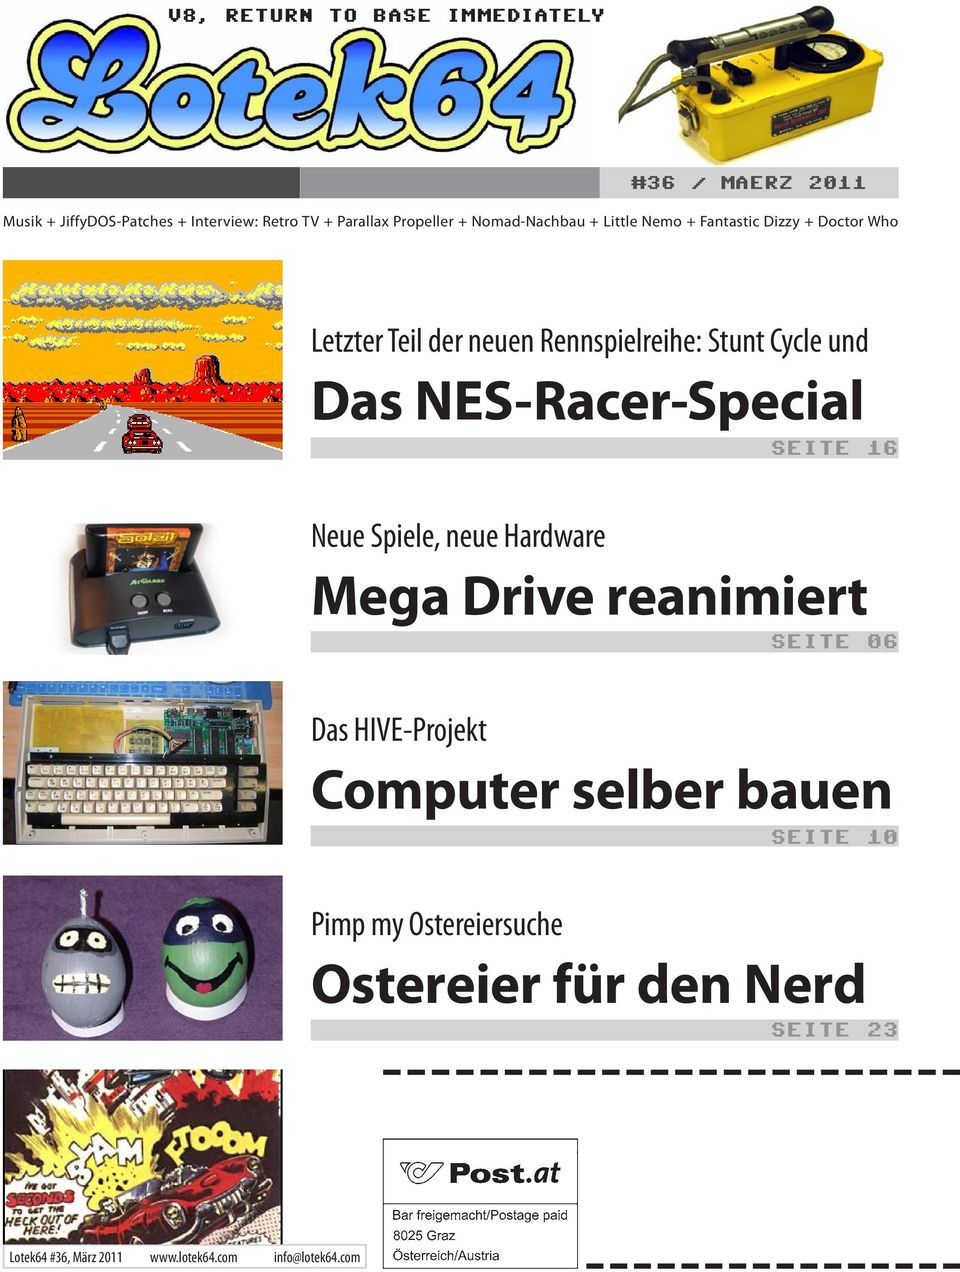 NES Racer Special SEITE 16 Neue Spiele neue Hardware Mega Drive reanimiert SEITE